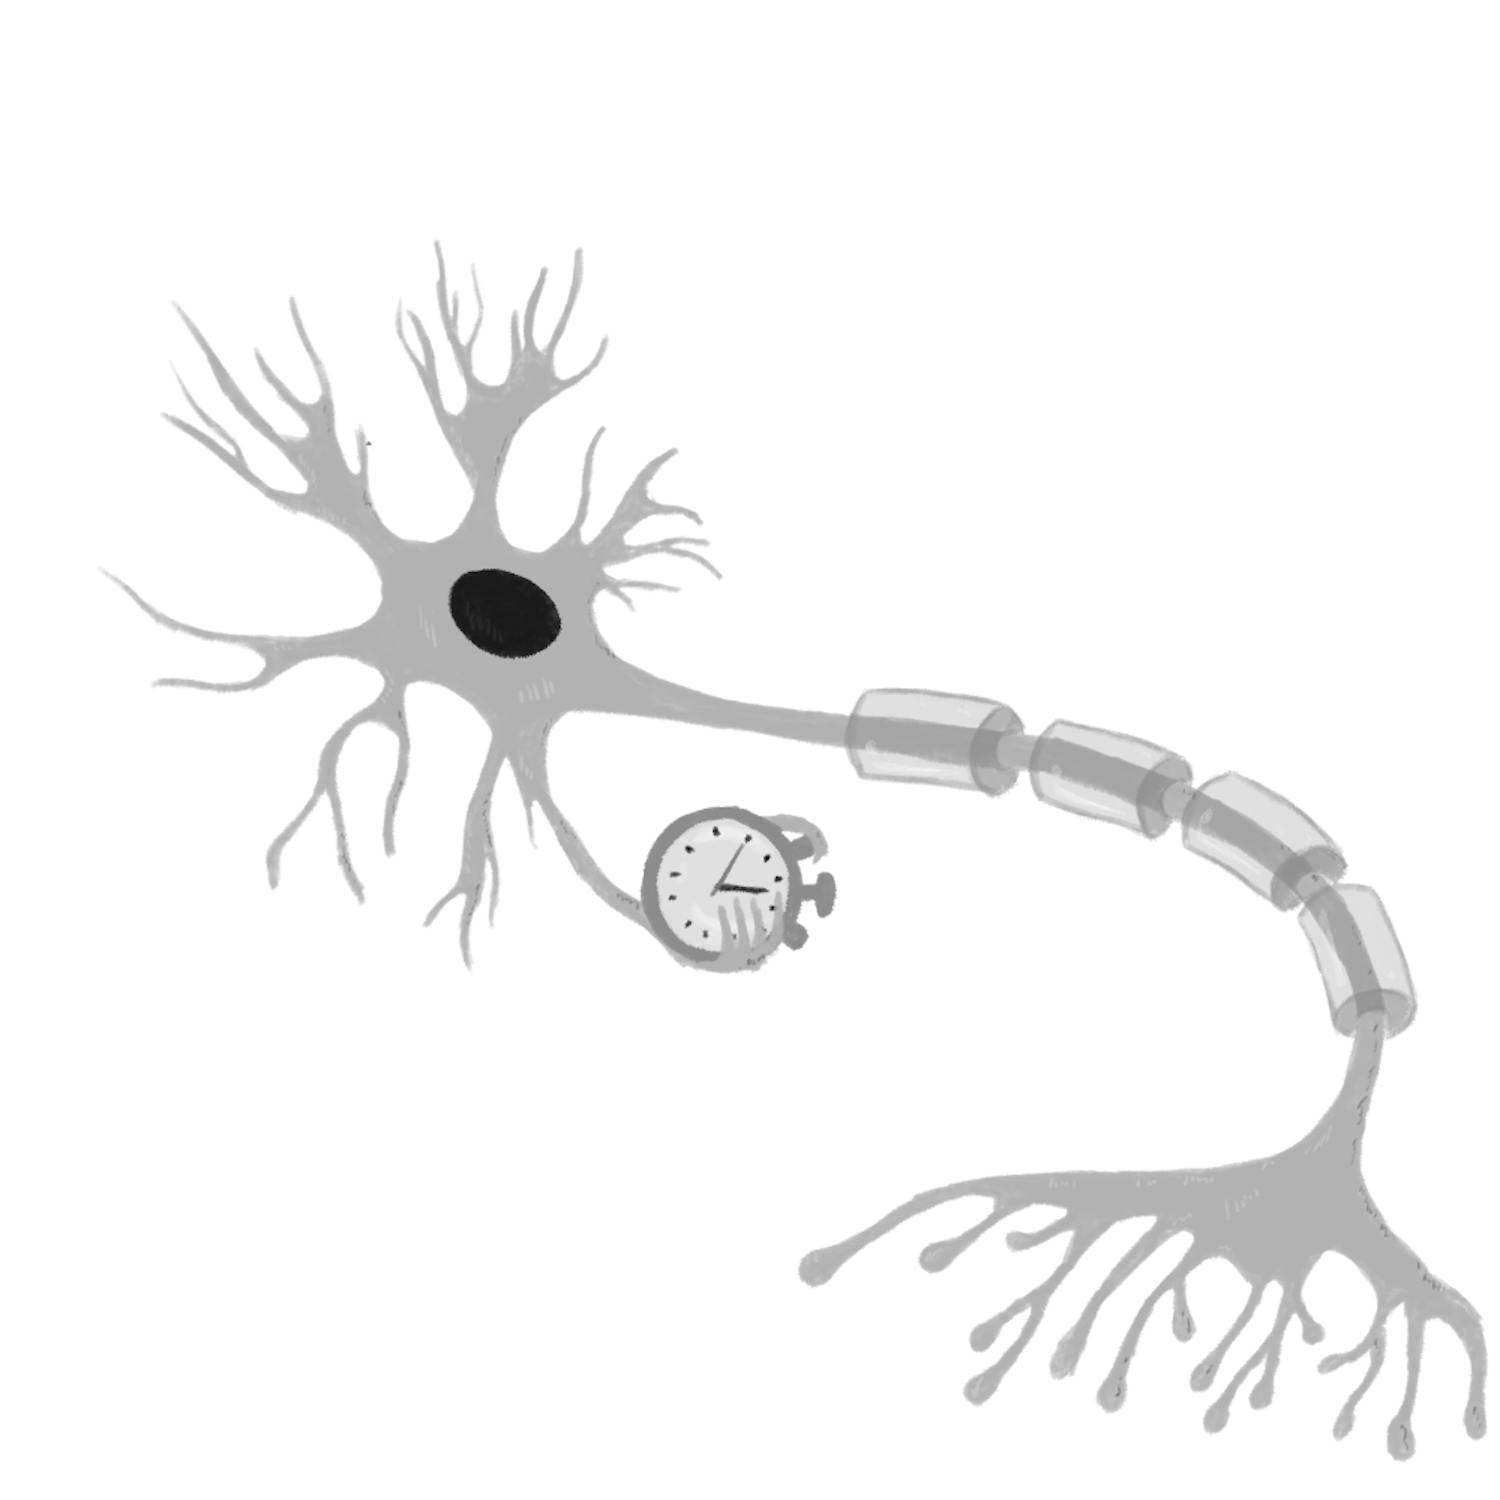 neuron-stopwatch-bw